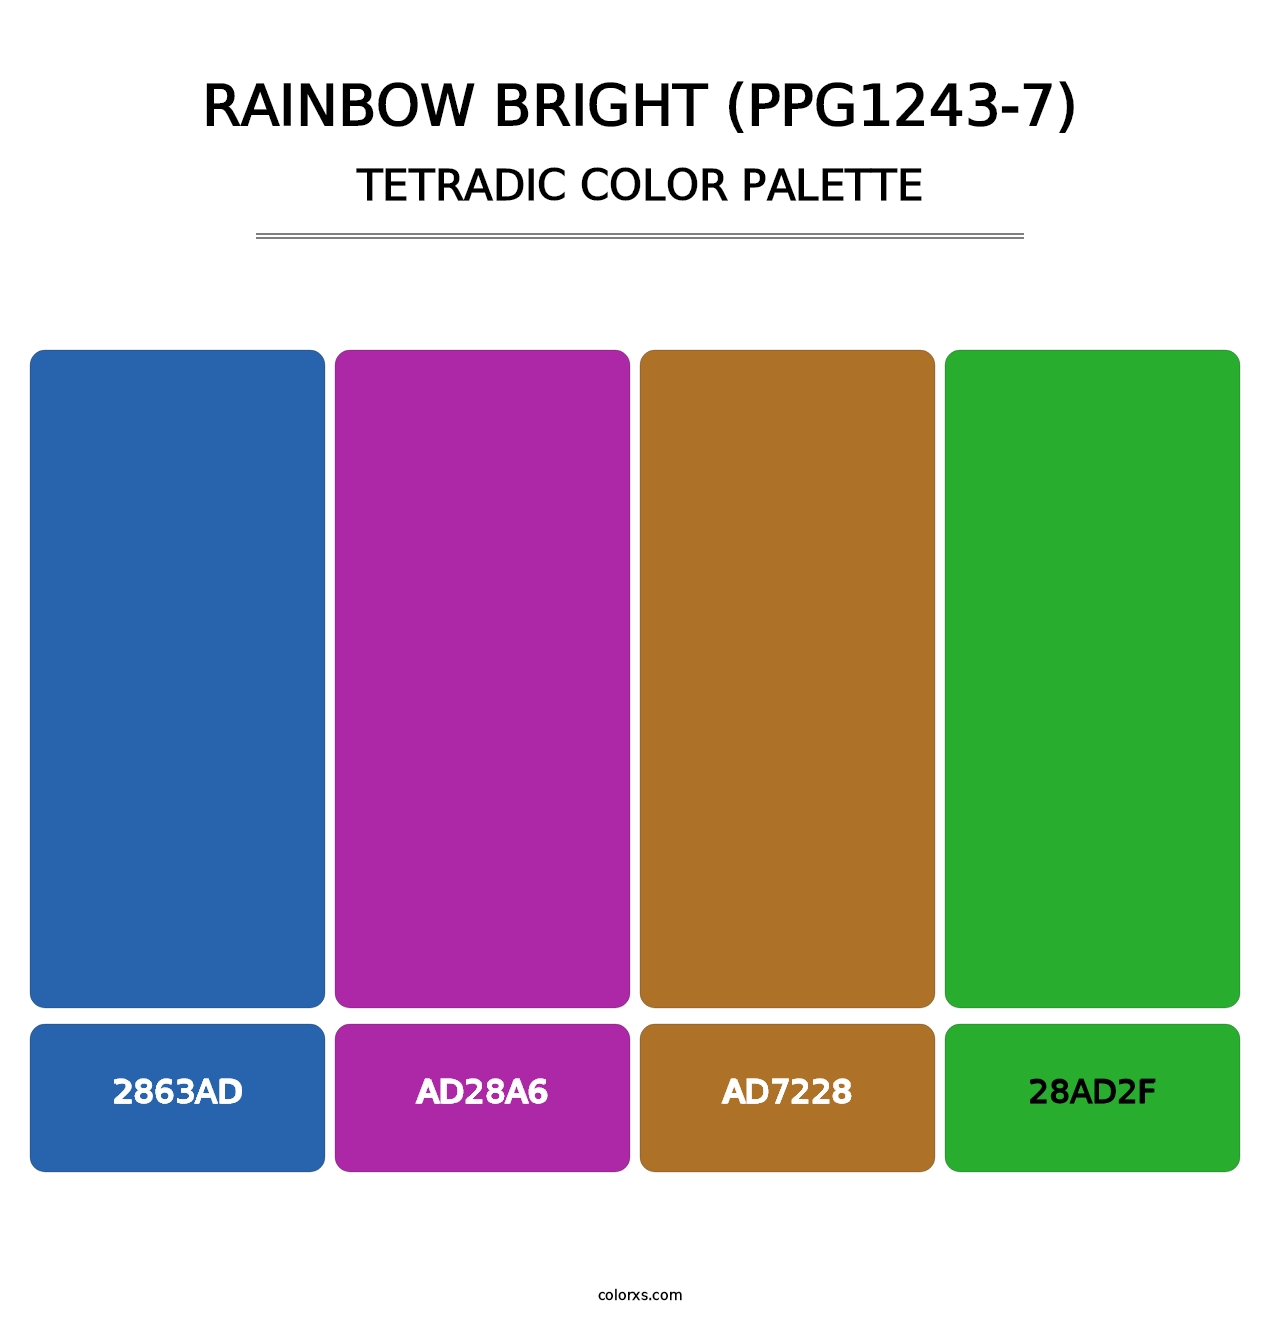 Rainbow Bright (PPG1243-7) - Tetradic Color Palette